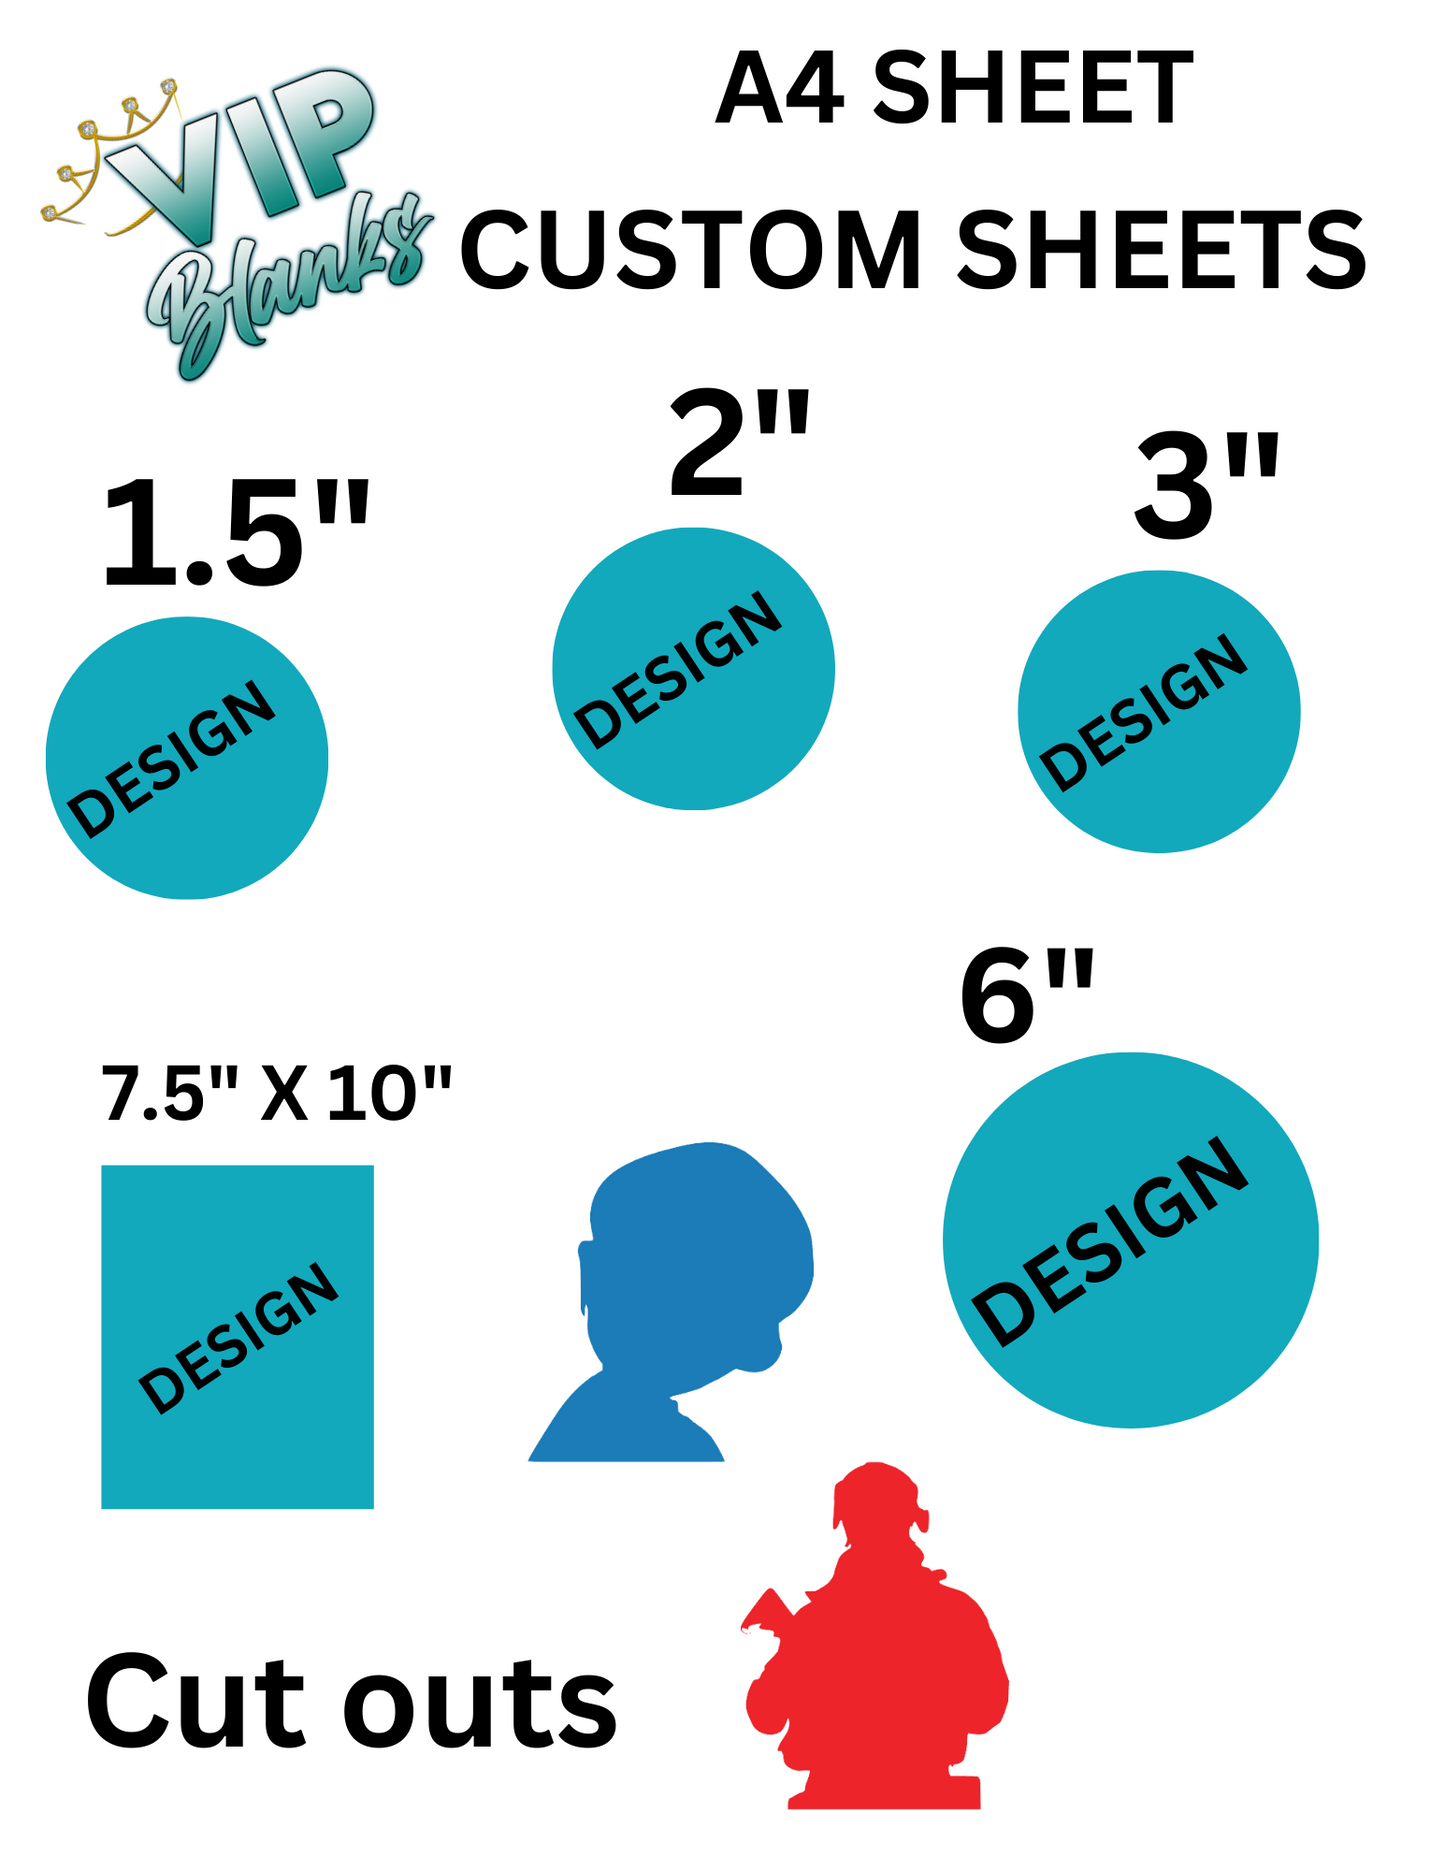 Personalized custom edible sheets